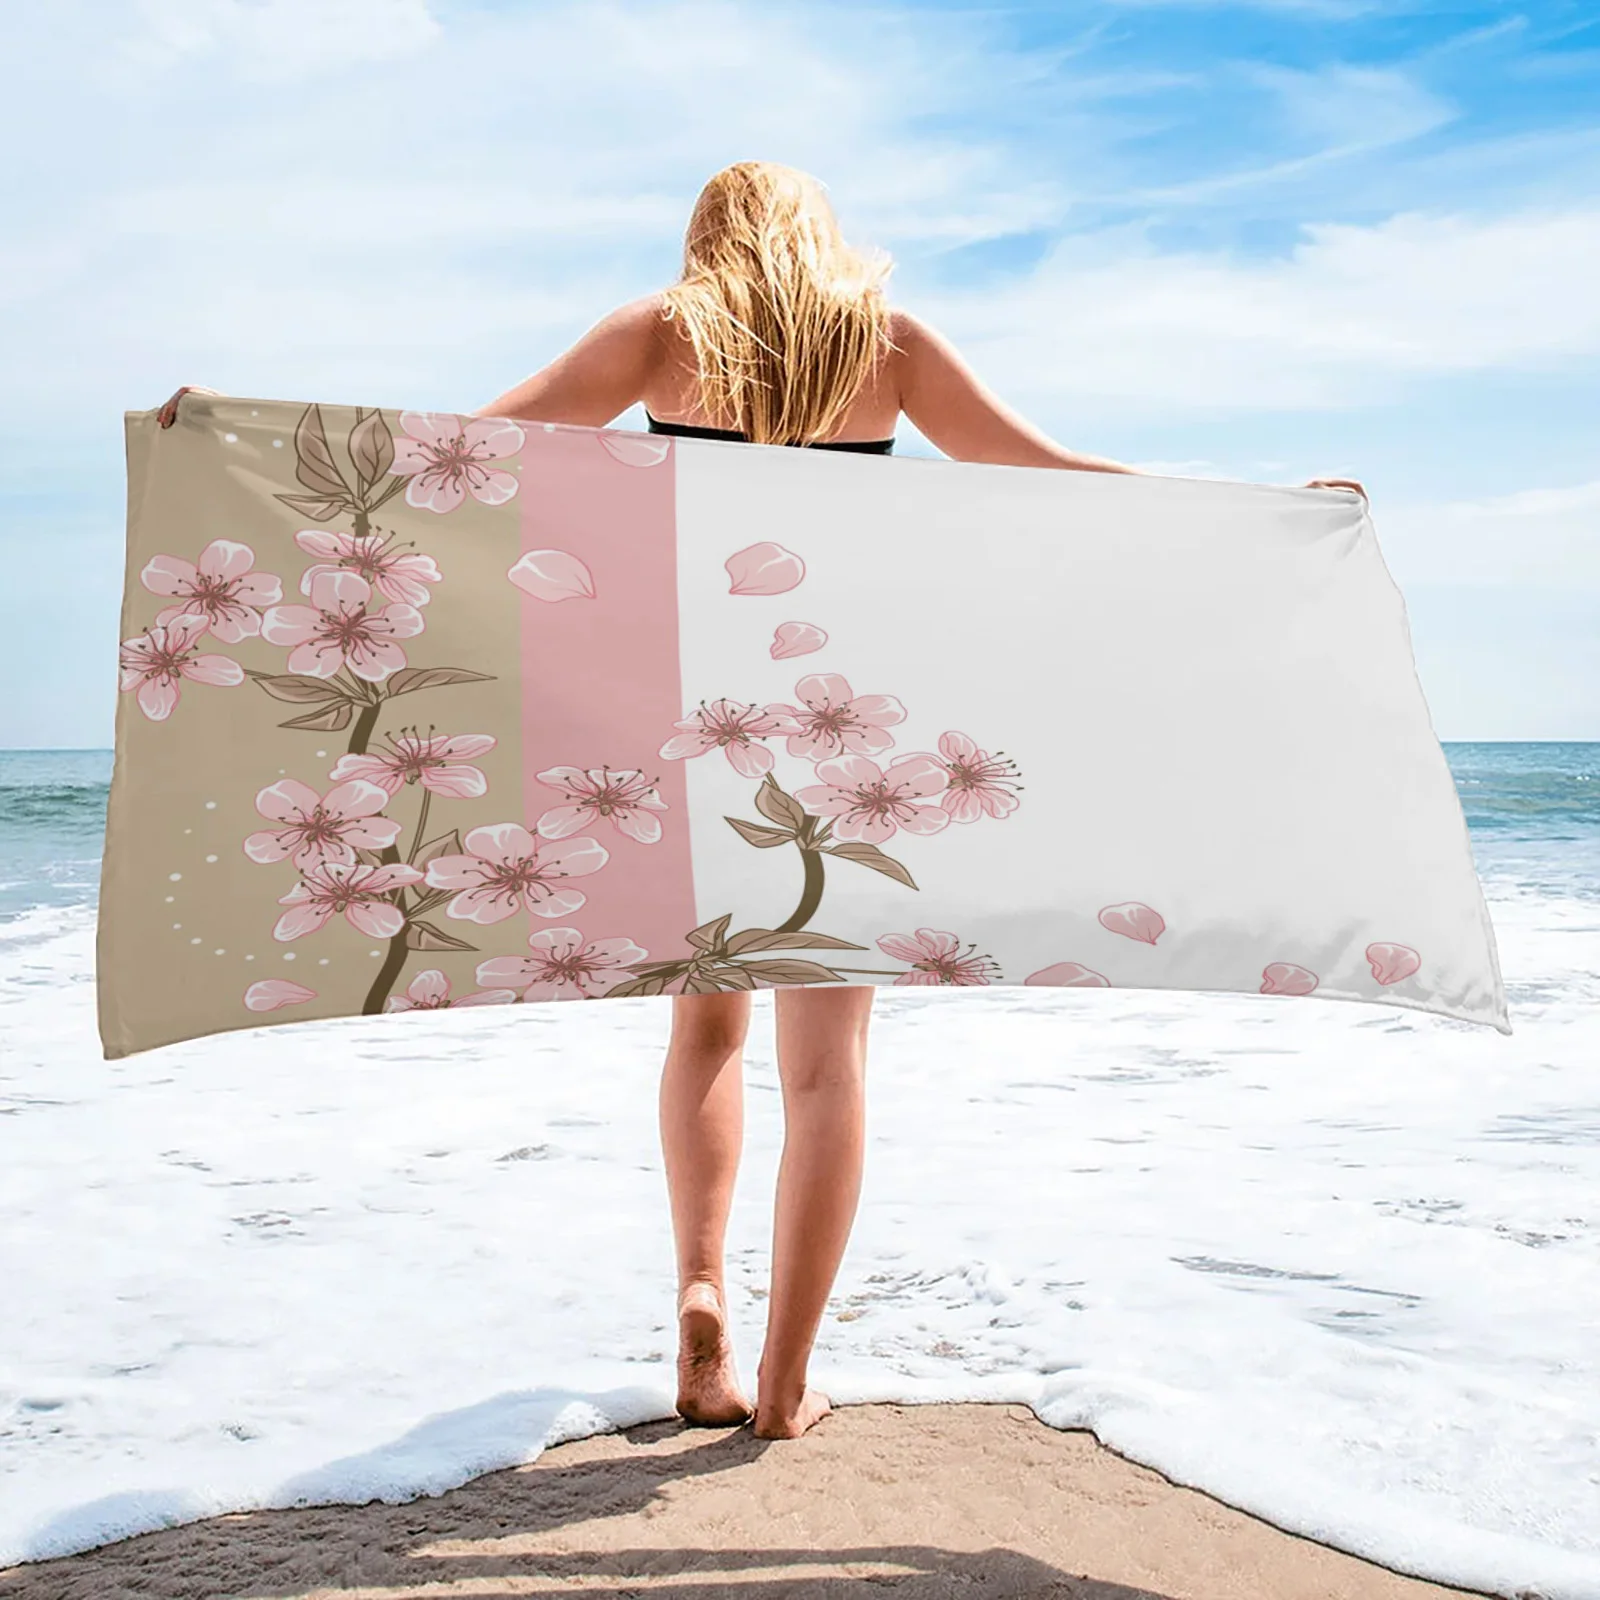 

Peach Blossom Petals Leaves Flower Bath Towel Camping Bathroom Accessories Microfiber Beach Towel Home Bath Towels for Adults